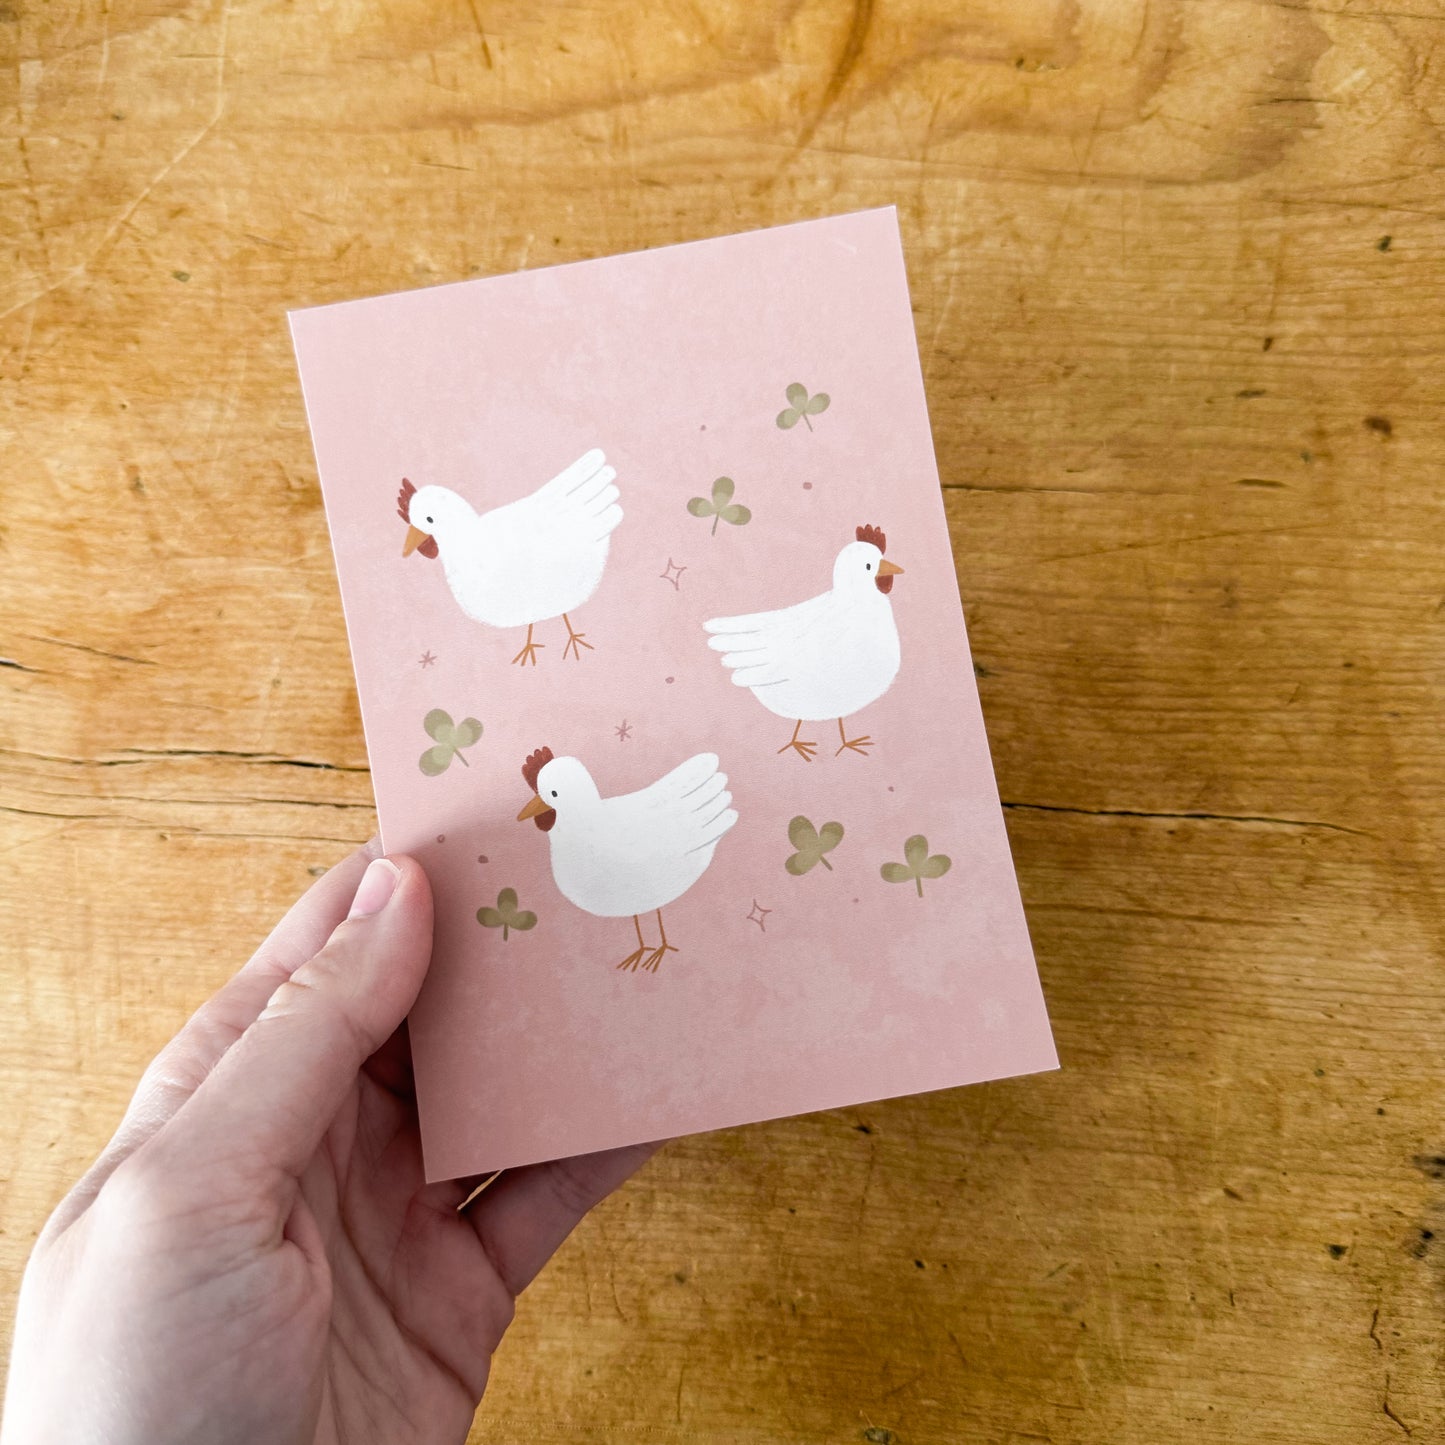 Clover & Chickens Mini Print/Postcard